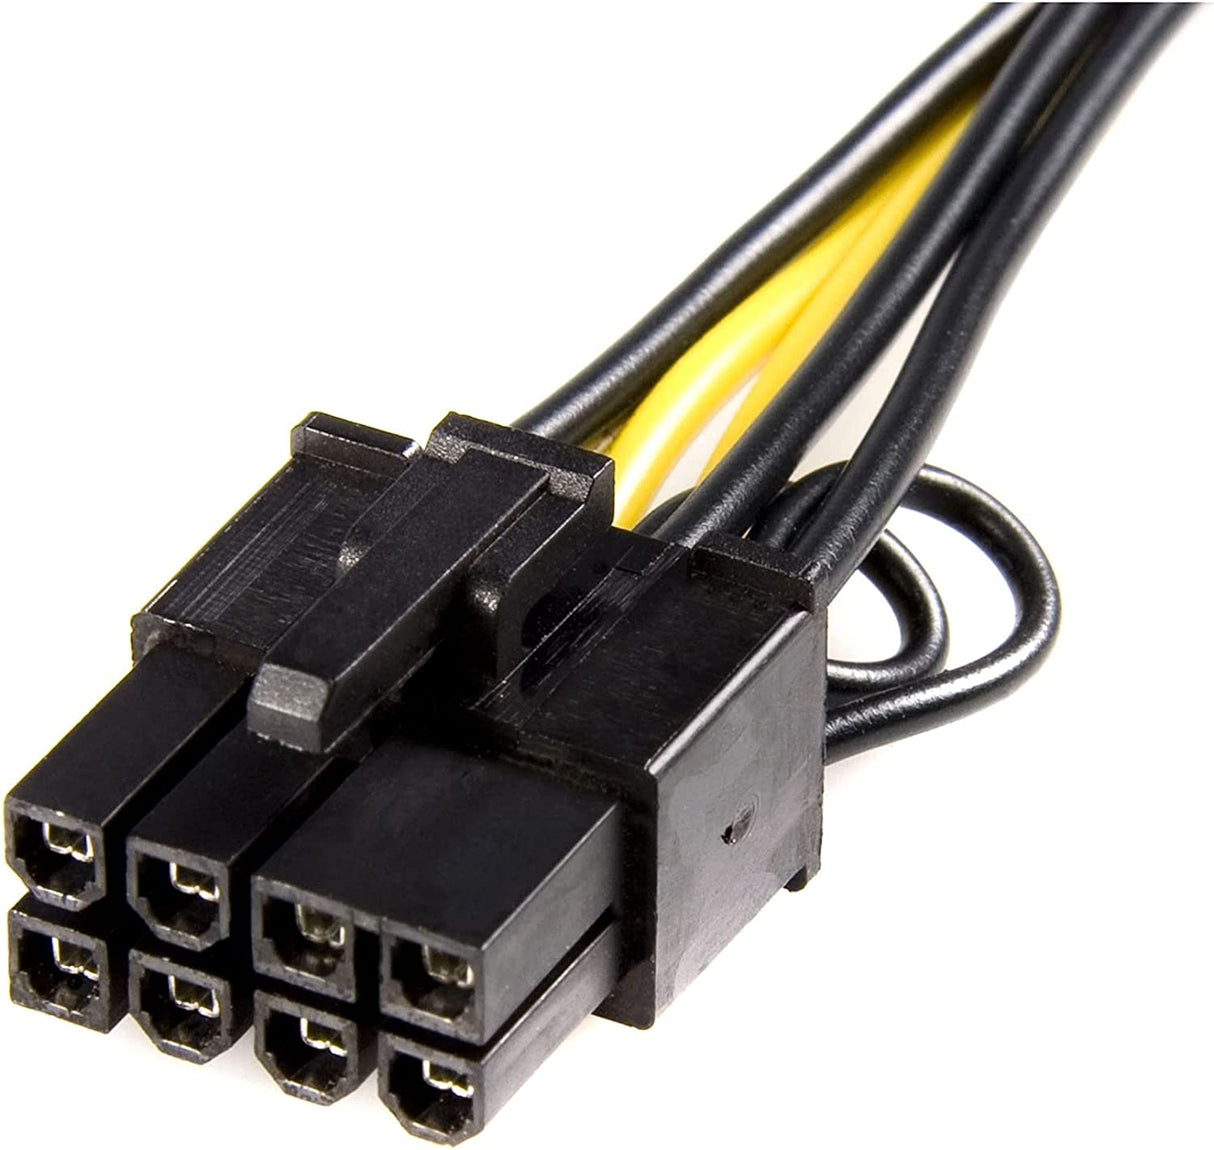 StarTech.com PCI Express 6 pin to 8 pin Power Adapter Cable - Power cable - 6 pin PCIe power (F) to 8 pin PCIe power (M) - 6.1 in - yellow - PCIEX68ADAP,Black, Yellow